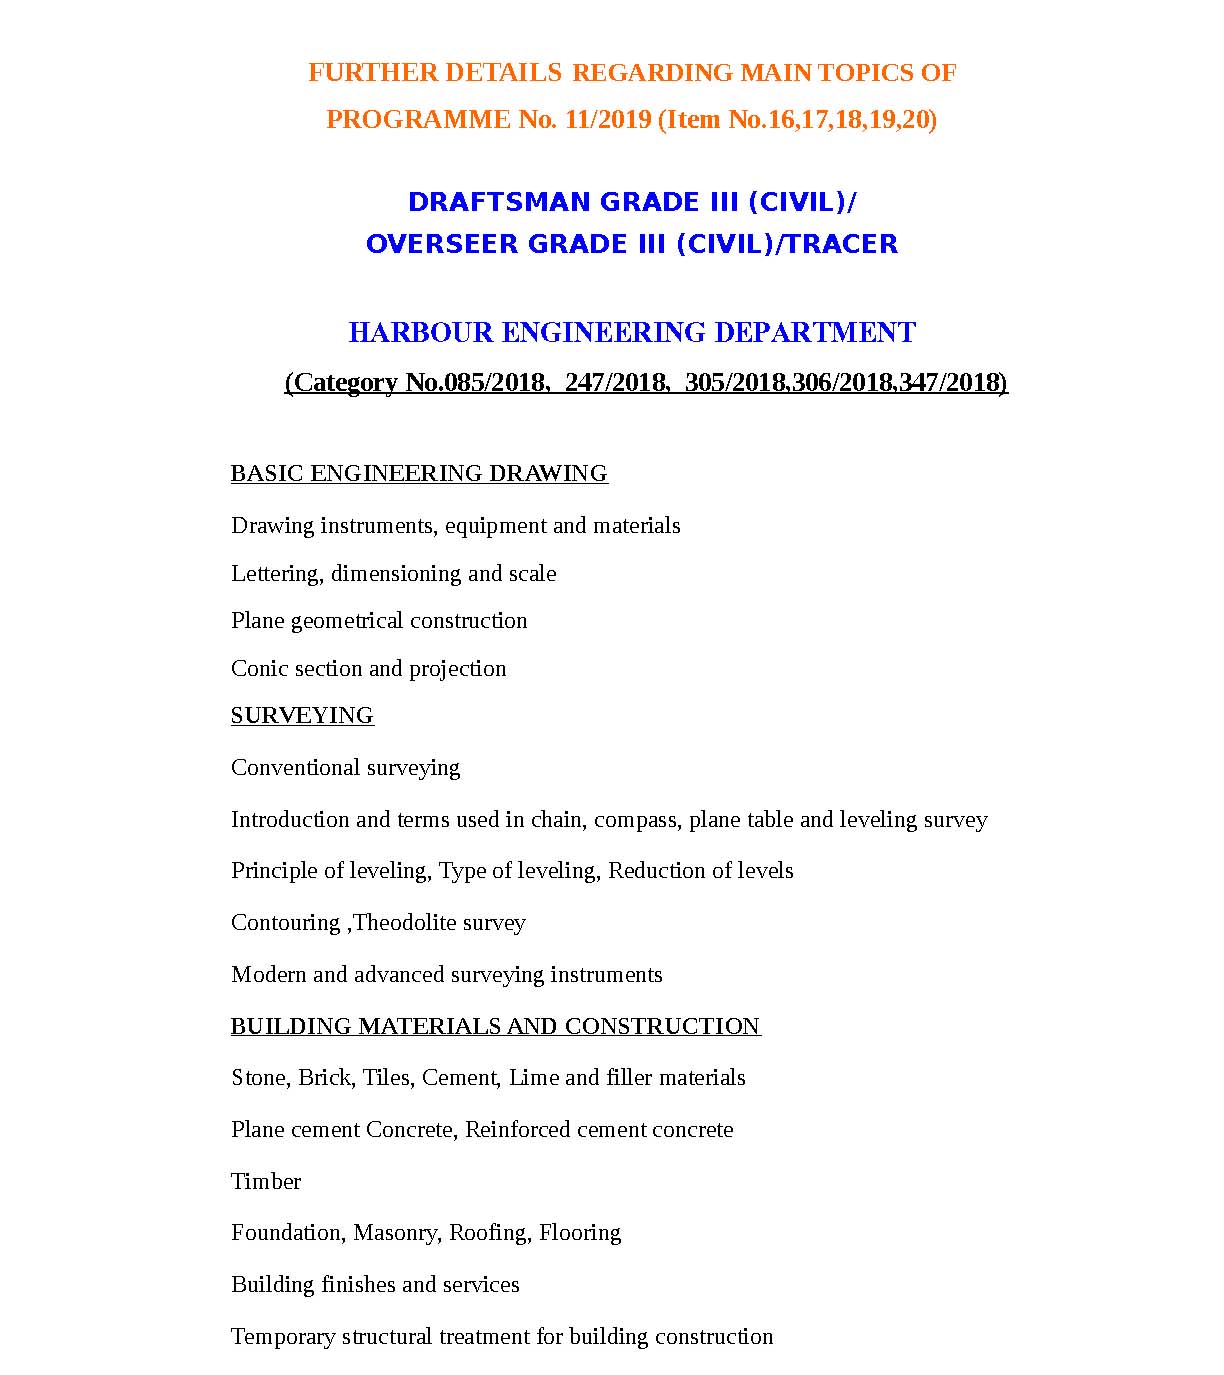 KPSC Syllabus Draftsman Overseer Grade III Civil Exam 2019 - Notification Image 1